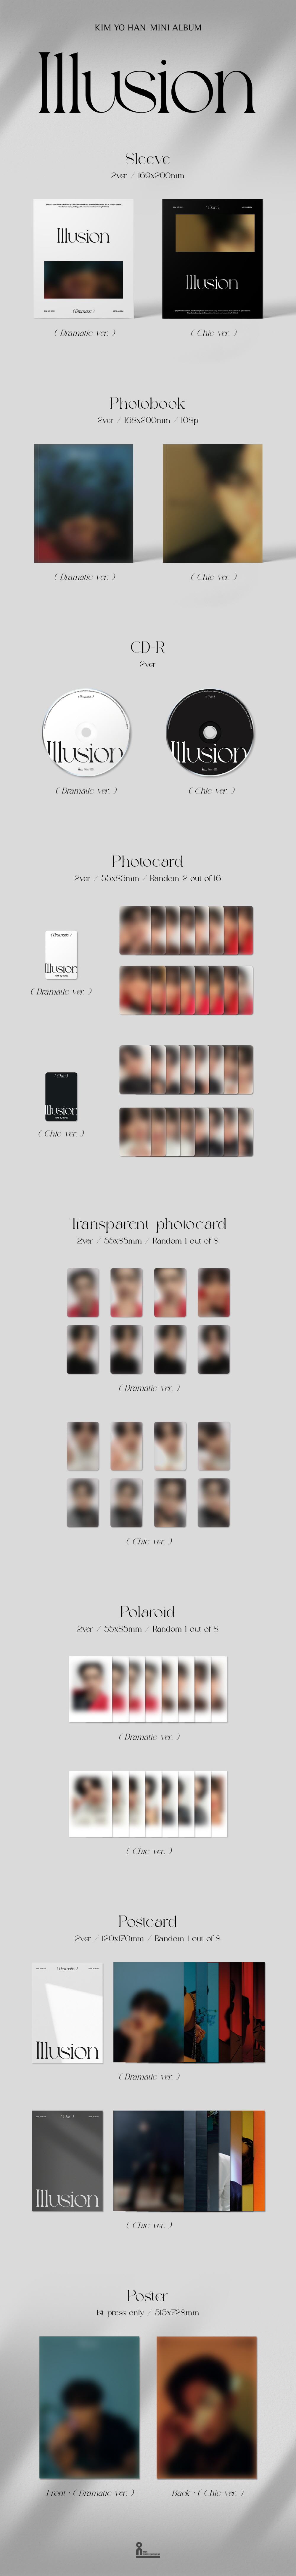 KIM YO HAN - [Illusion]  / 1ST MINI ALBUM KIMYOHAN KIMYOHANalbum Illusionalbum Illusion CD album photobook photocard kpop